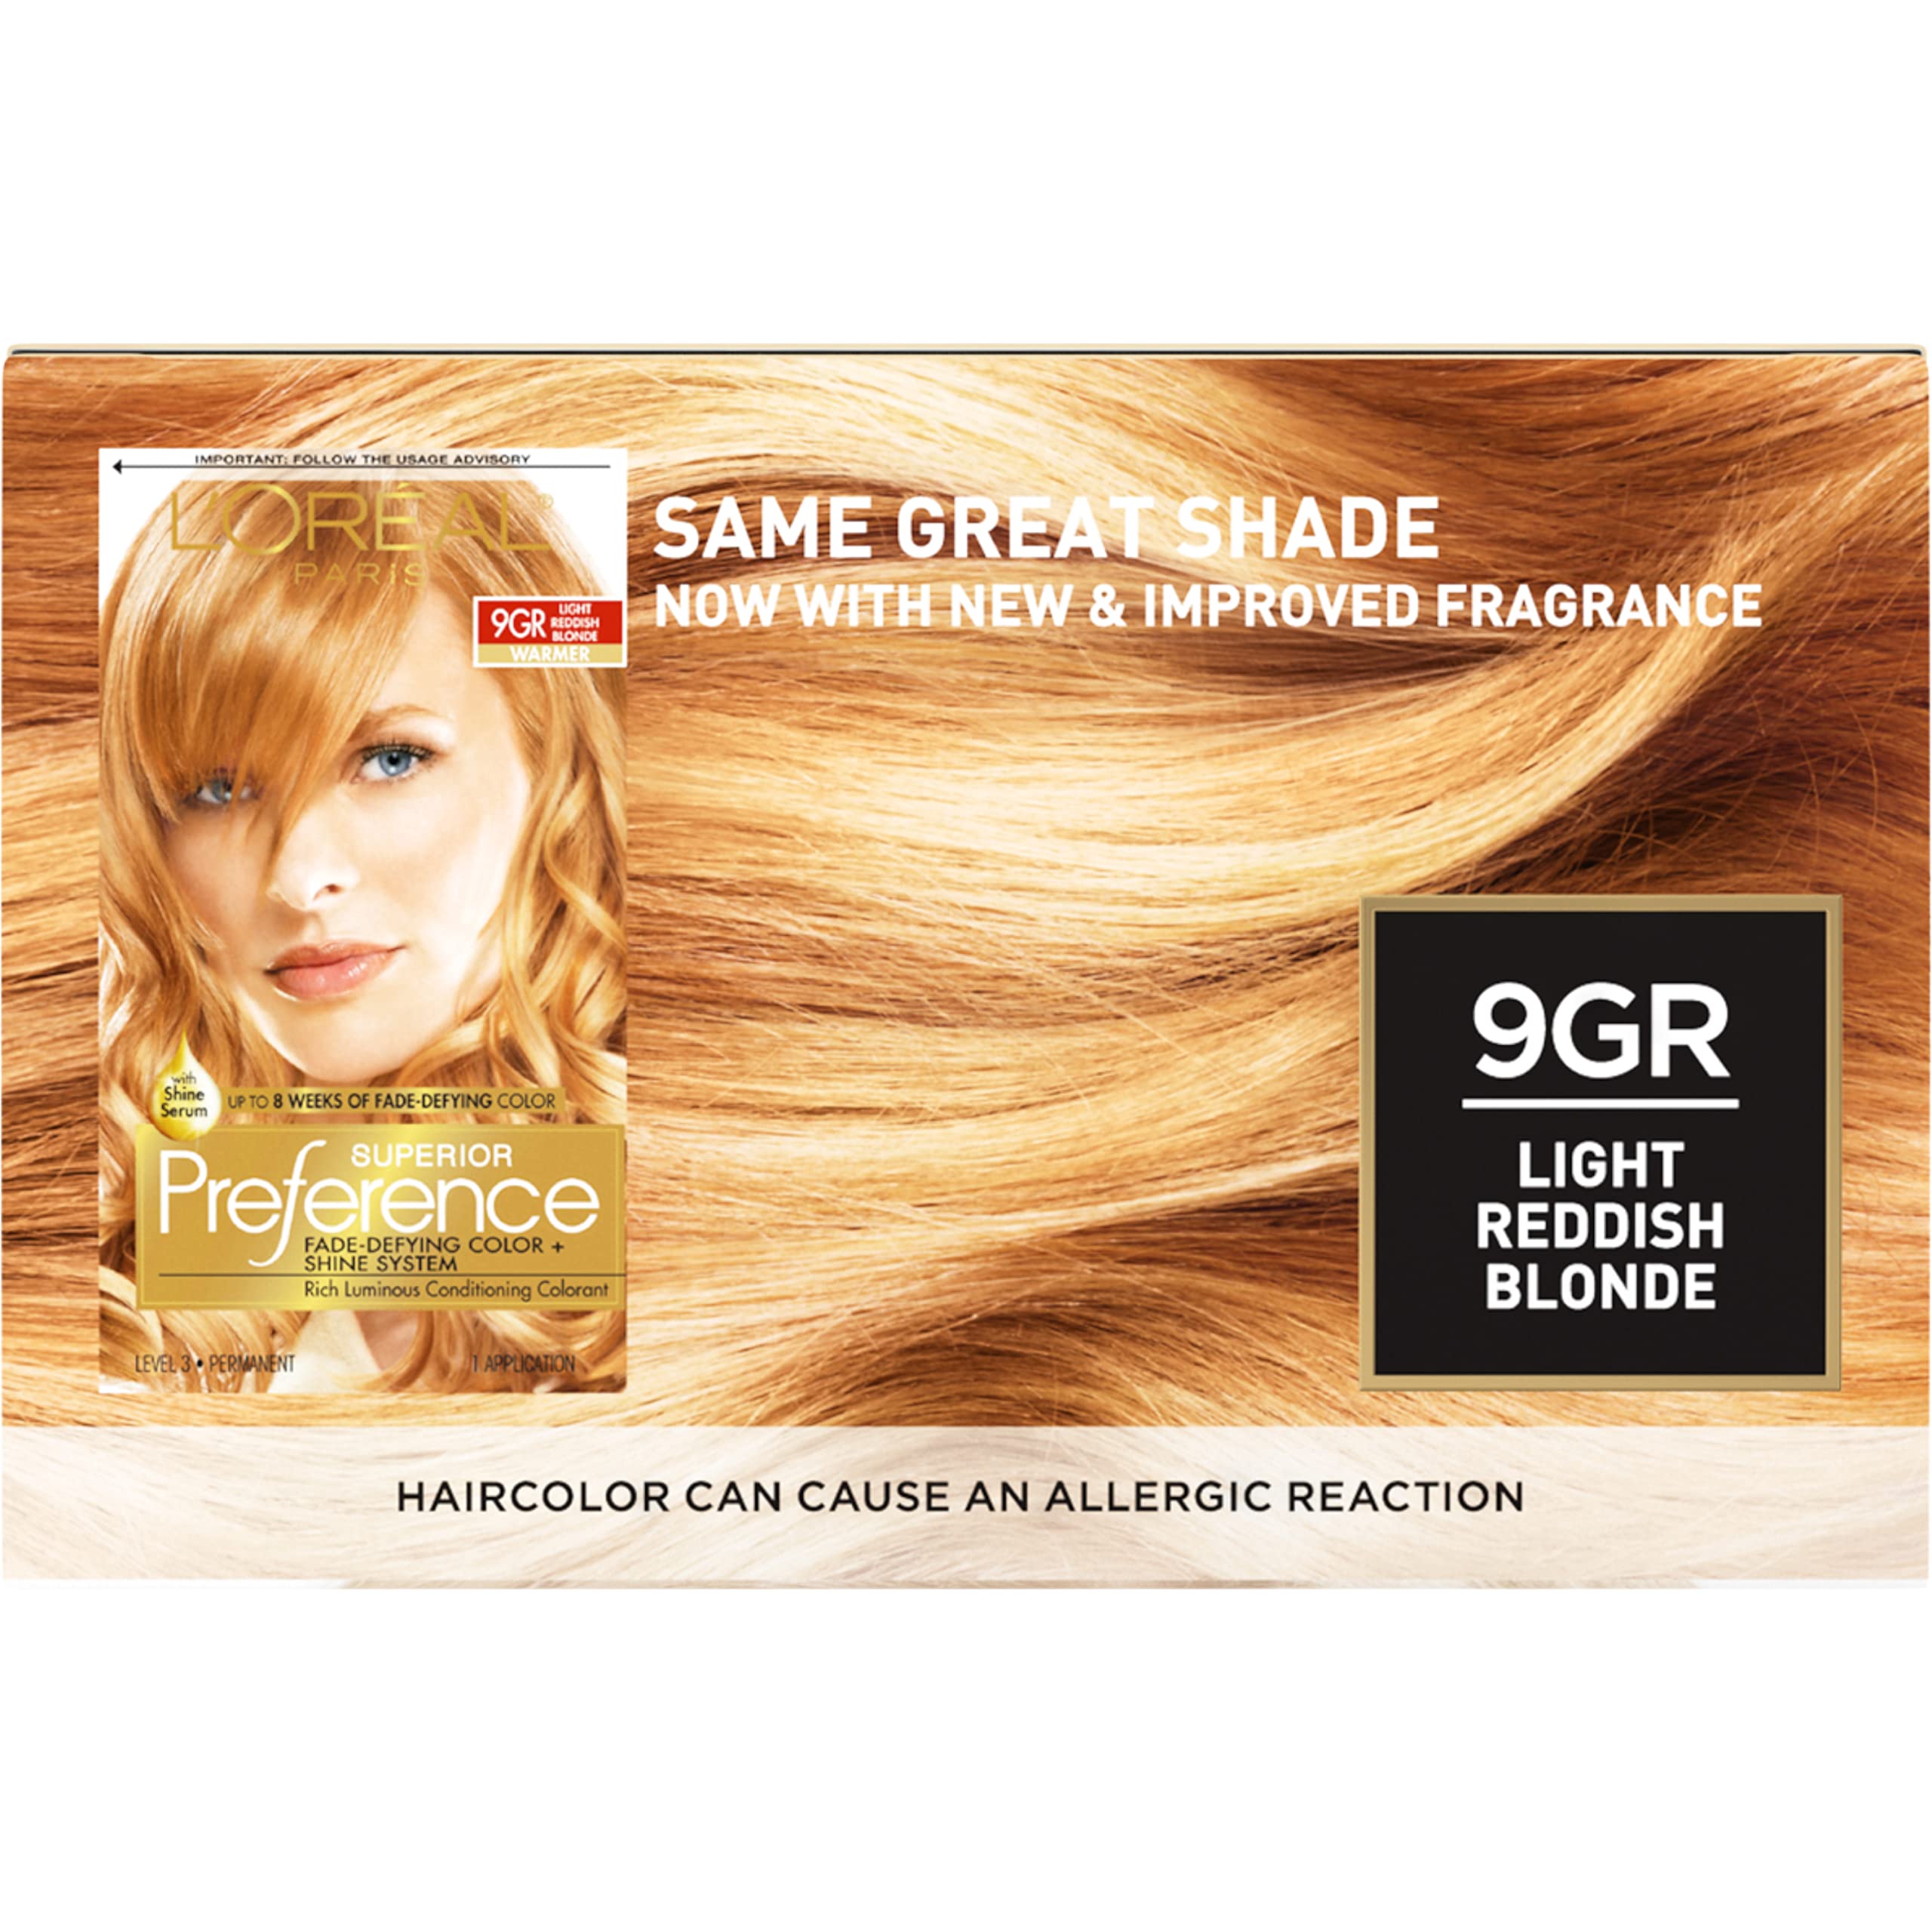 L'Oreal Paris Superior Preference Fade-Defying + Shine Permanent Hair Color, 9GR Light Golden Reddish Blonde, Pack of 1, Hair Dye